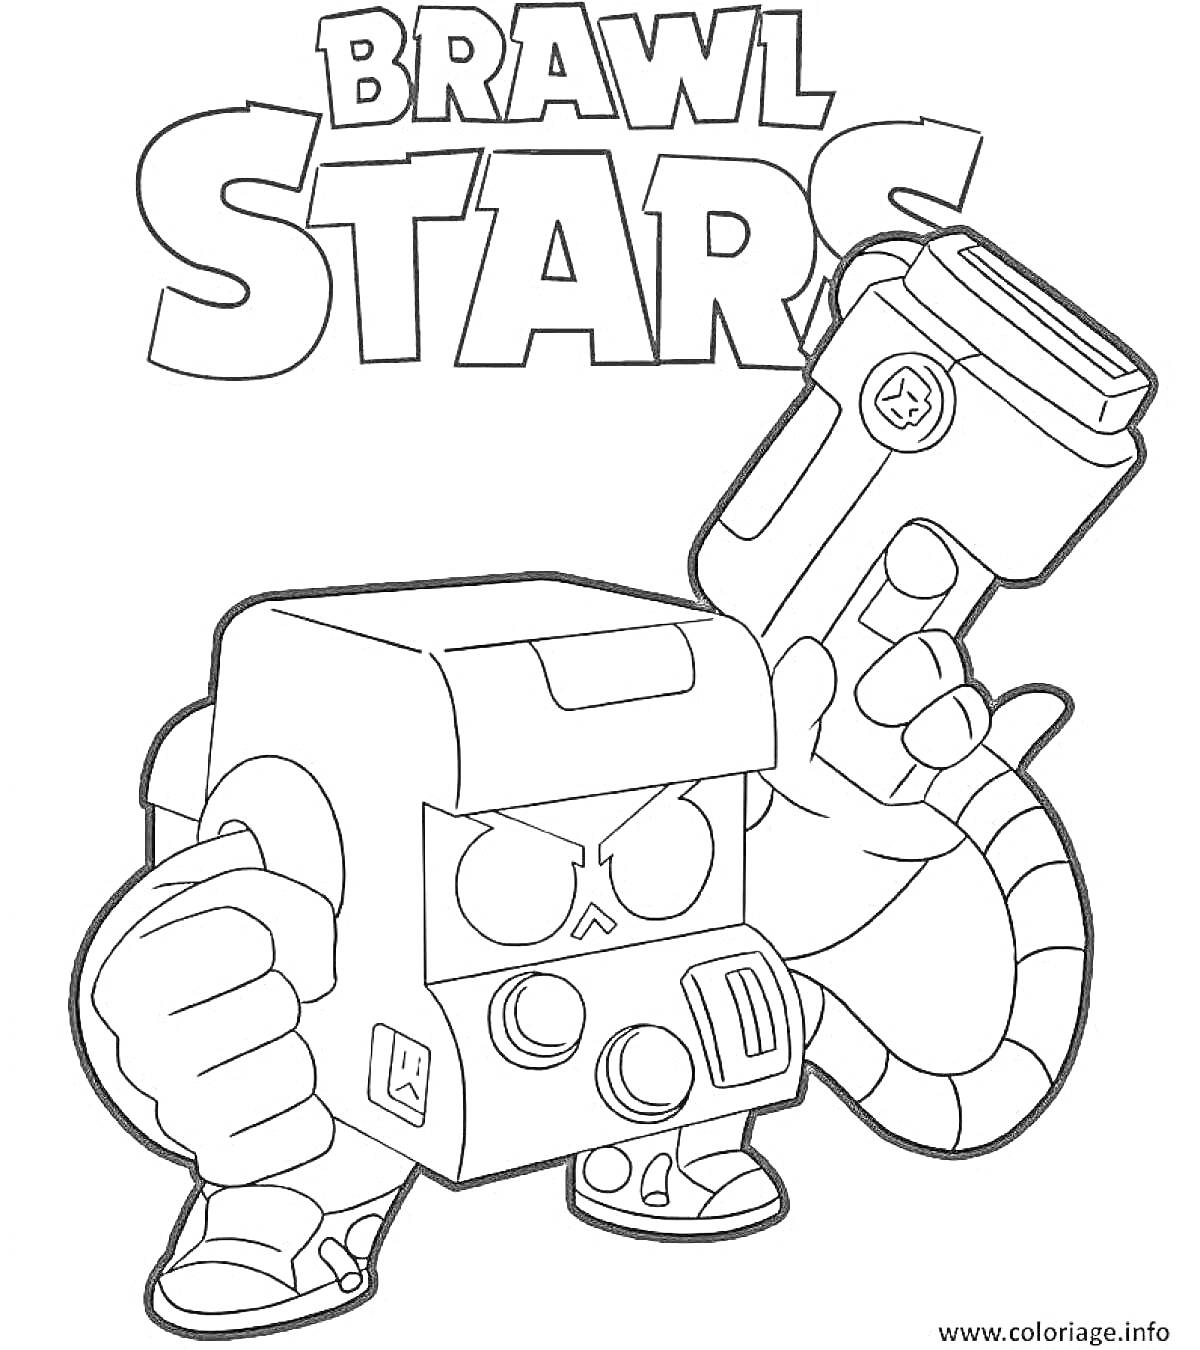 Раскраска Brawl Stars - Робот с оружием в руке